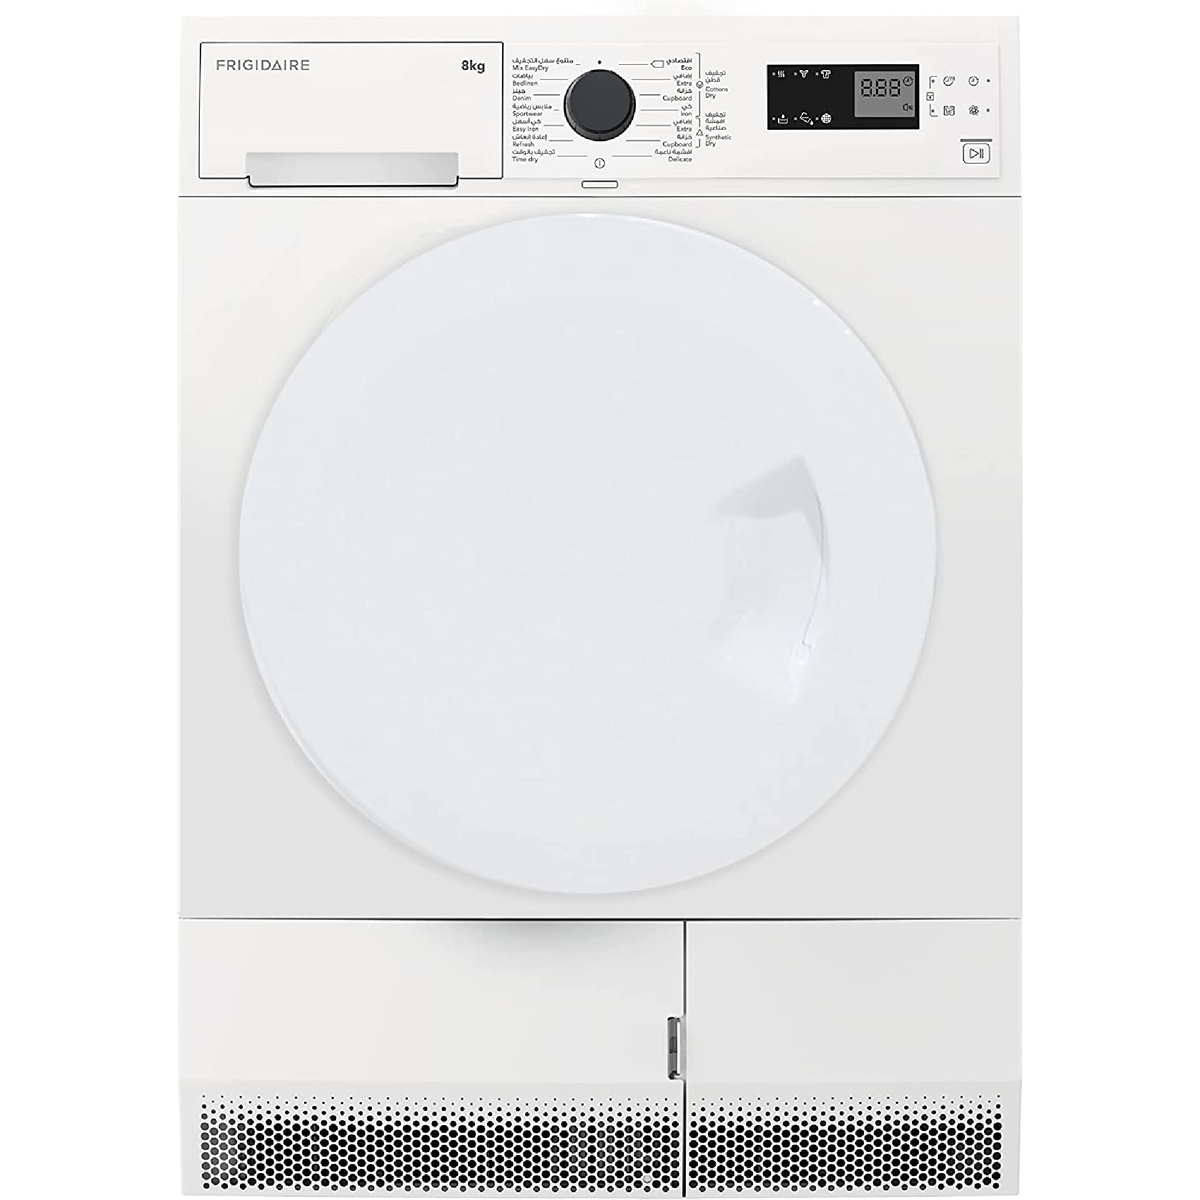 Frigidaire Front Load Condenser Dryer, 8 kg, White, FDCB284B